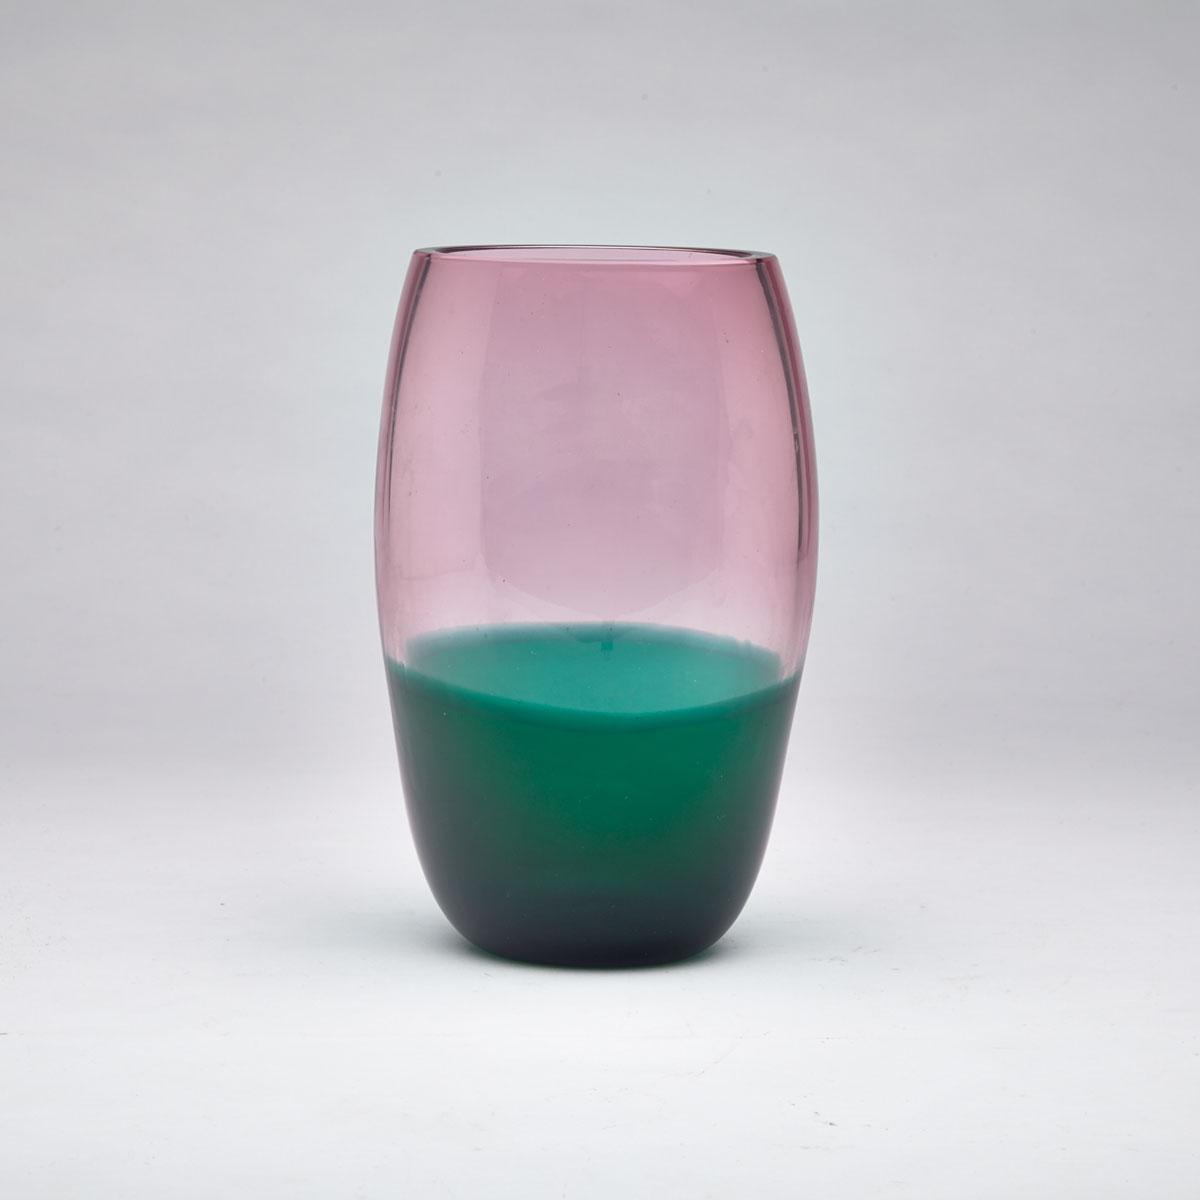 Marcello Furlan (Italian, b.1962), Red and Green Incalmo Glass Vase, 1992